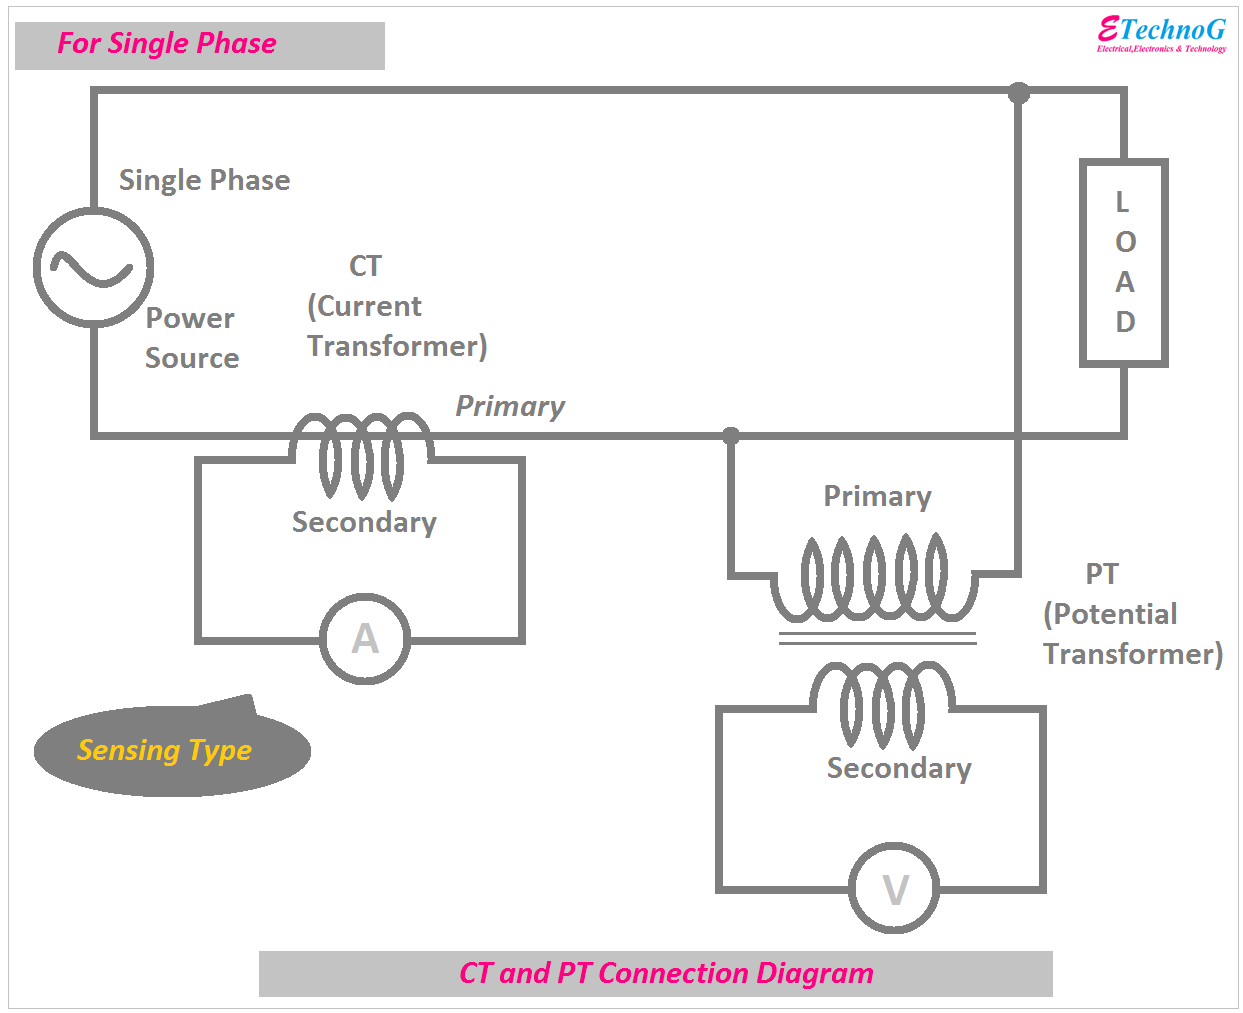 CT and PT Connection Diagram, CT PT Connection, connection of CT, Connection of PT